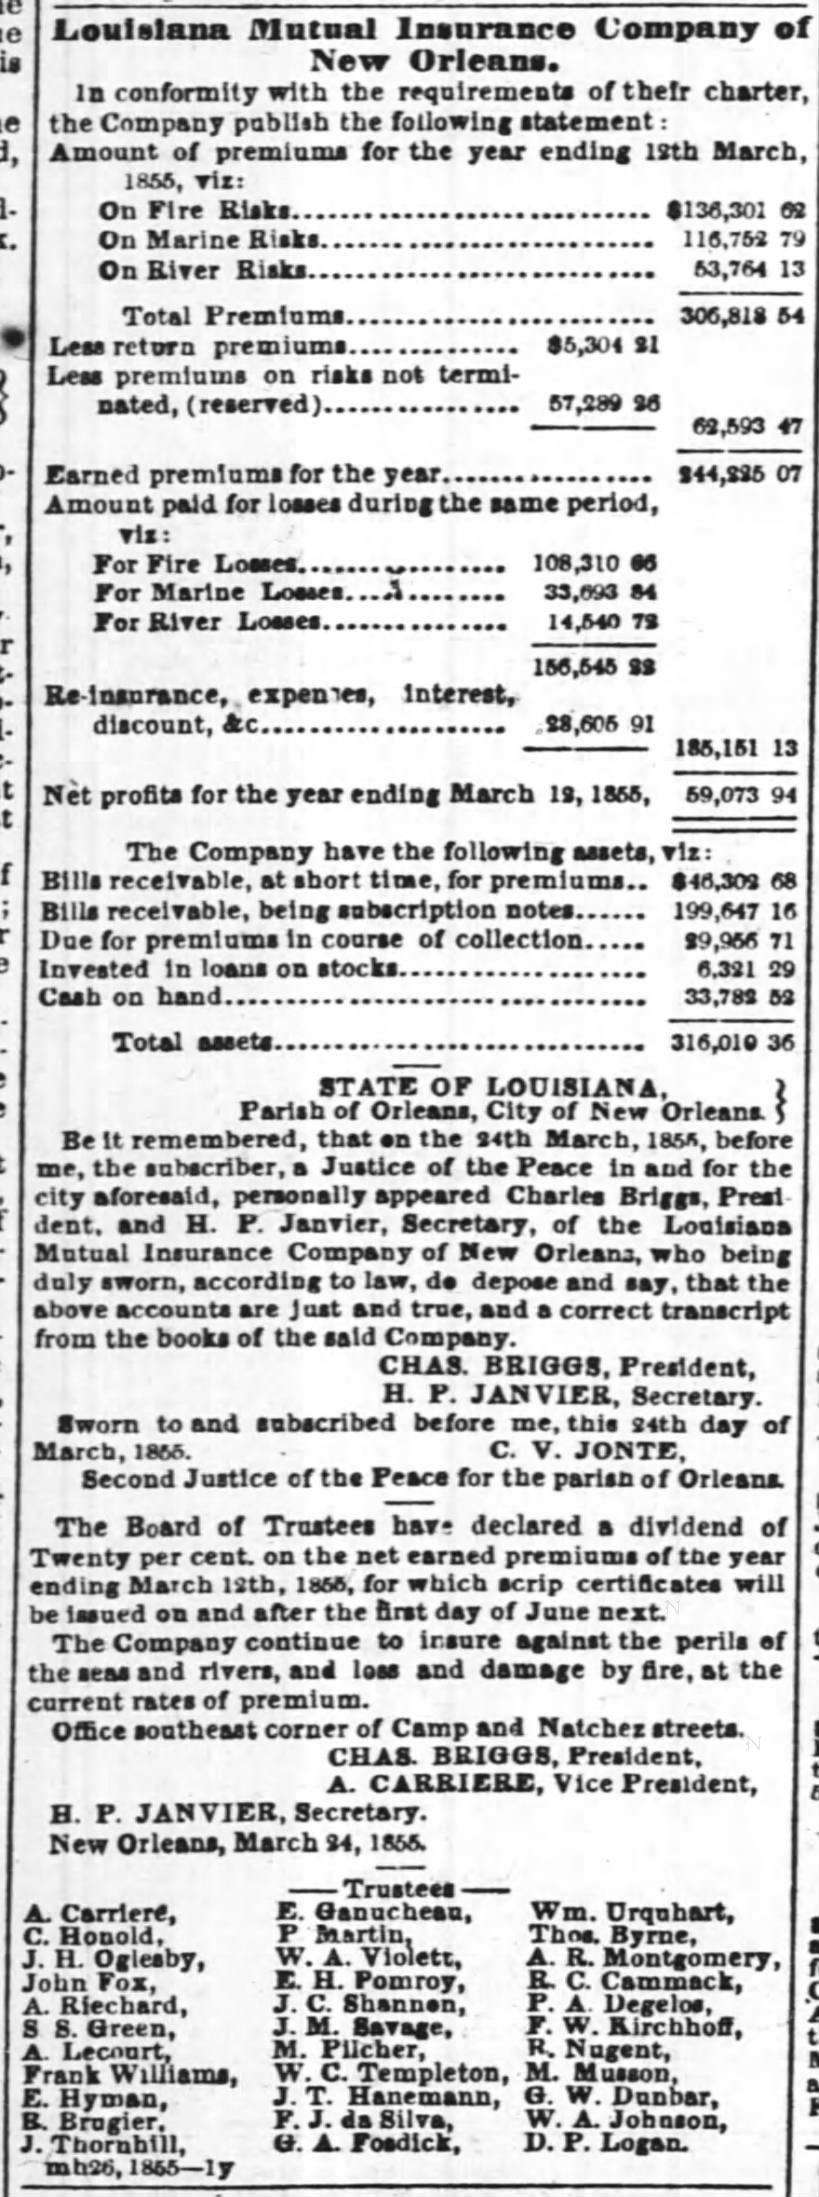 Louisiana Mutual Ins. Co.
H. P. Janvier, secy